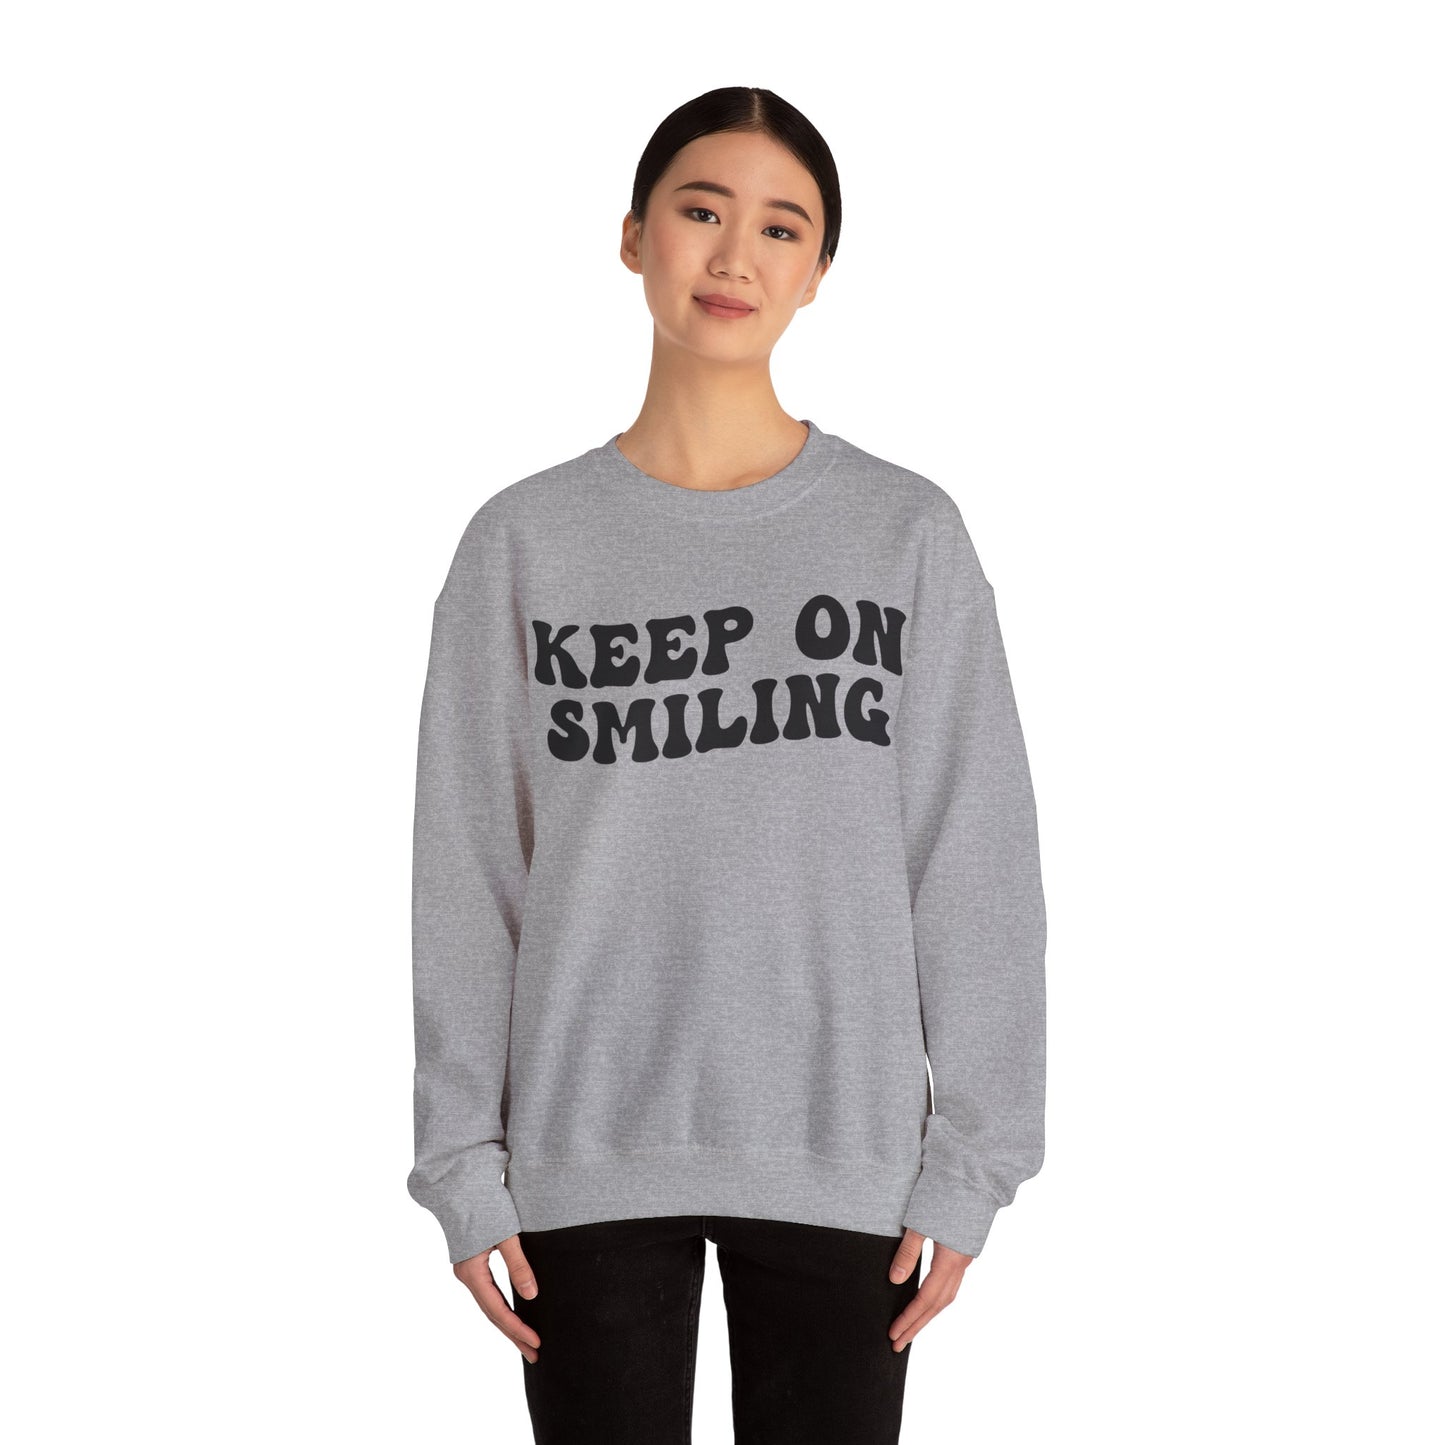 Keep On Smiling Sweatshirt, Encouragement Sweatshirt, Christian Mom Sweatshirt, Positivity Sweatshirt, Be Kind Sweatshirt, S1293